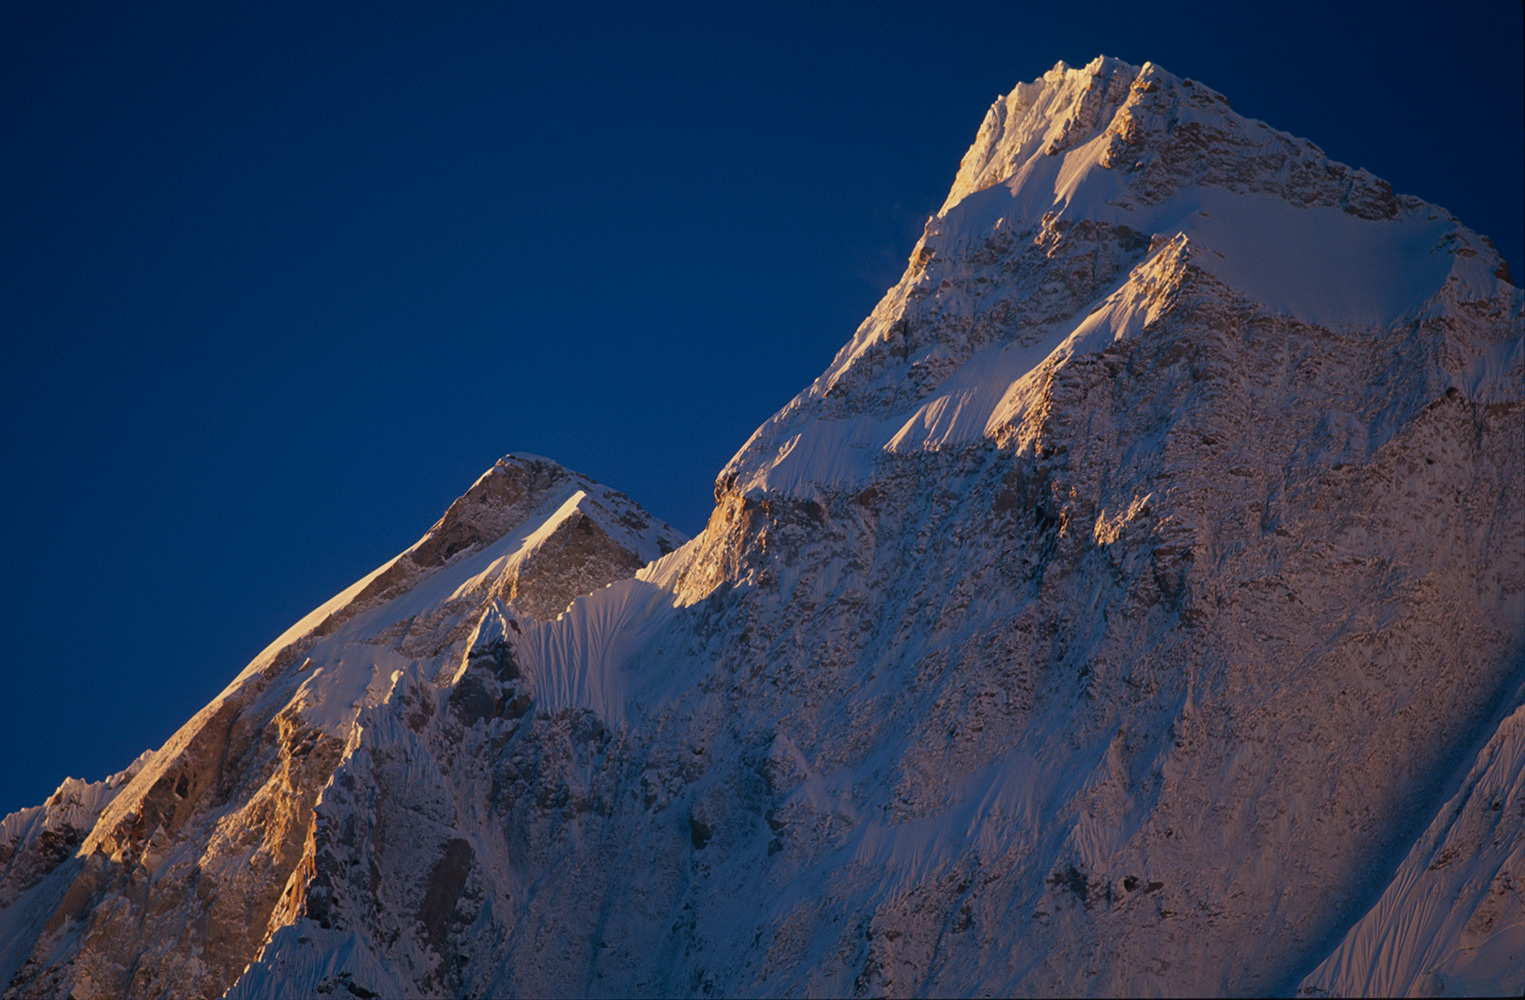 The summit. Telephoto at dawn, from Pethang Ringmo on the Kangshung glacierNikon F5, 180mm, Fuji Velvia 100